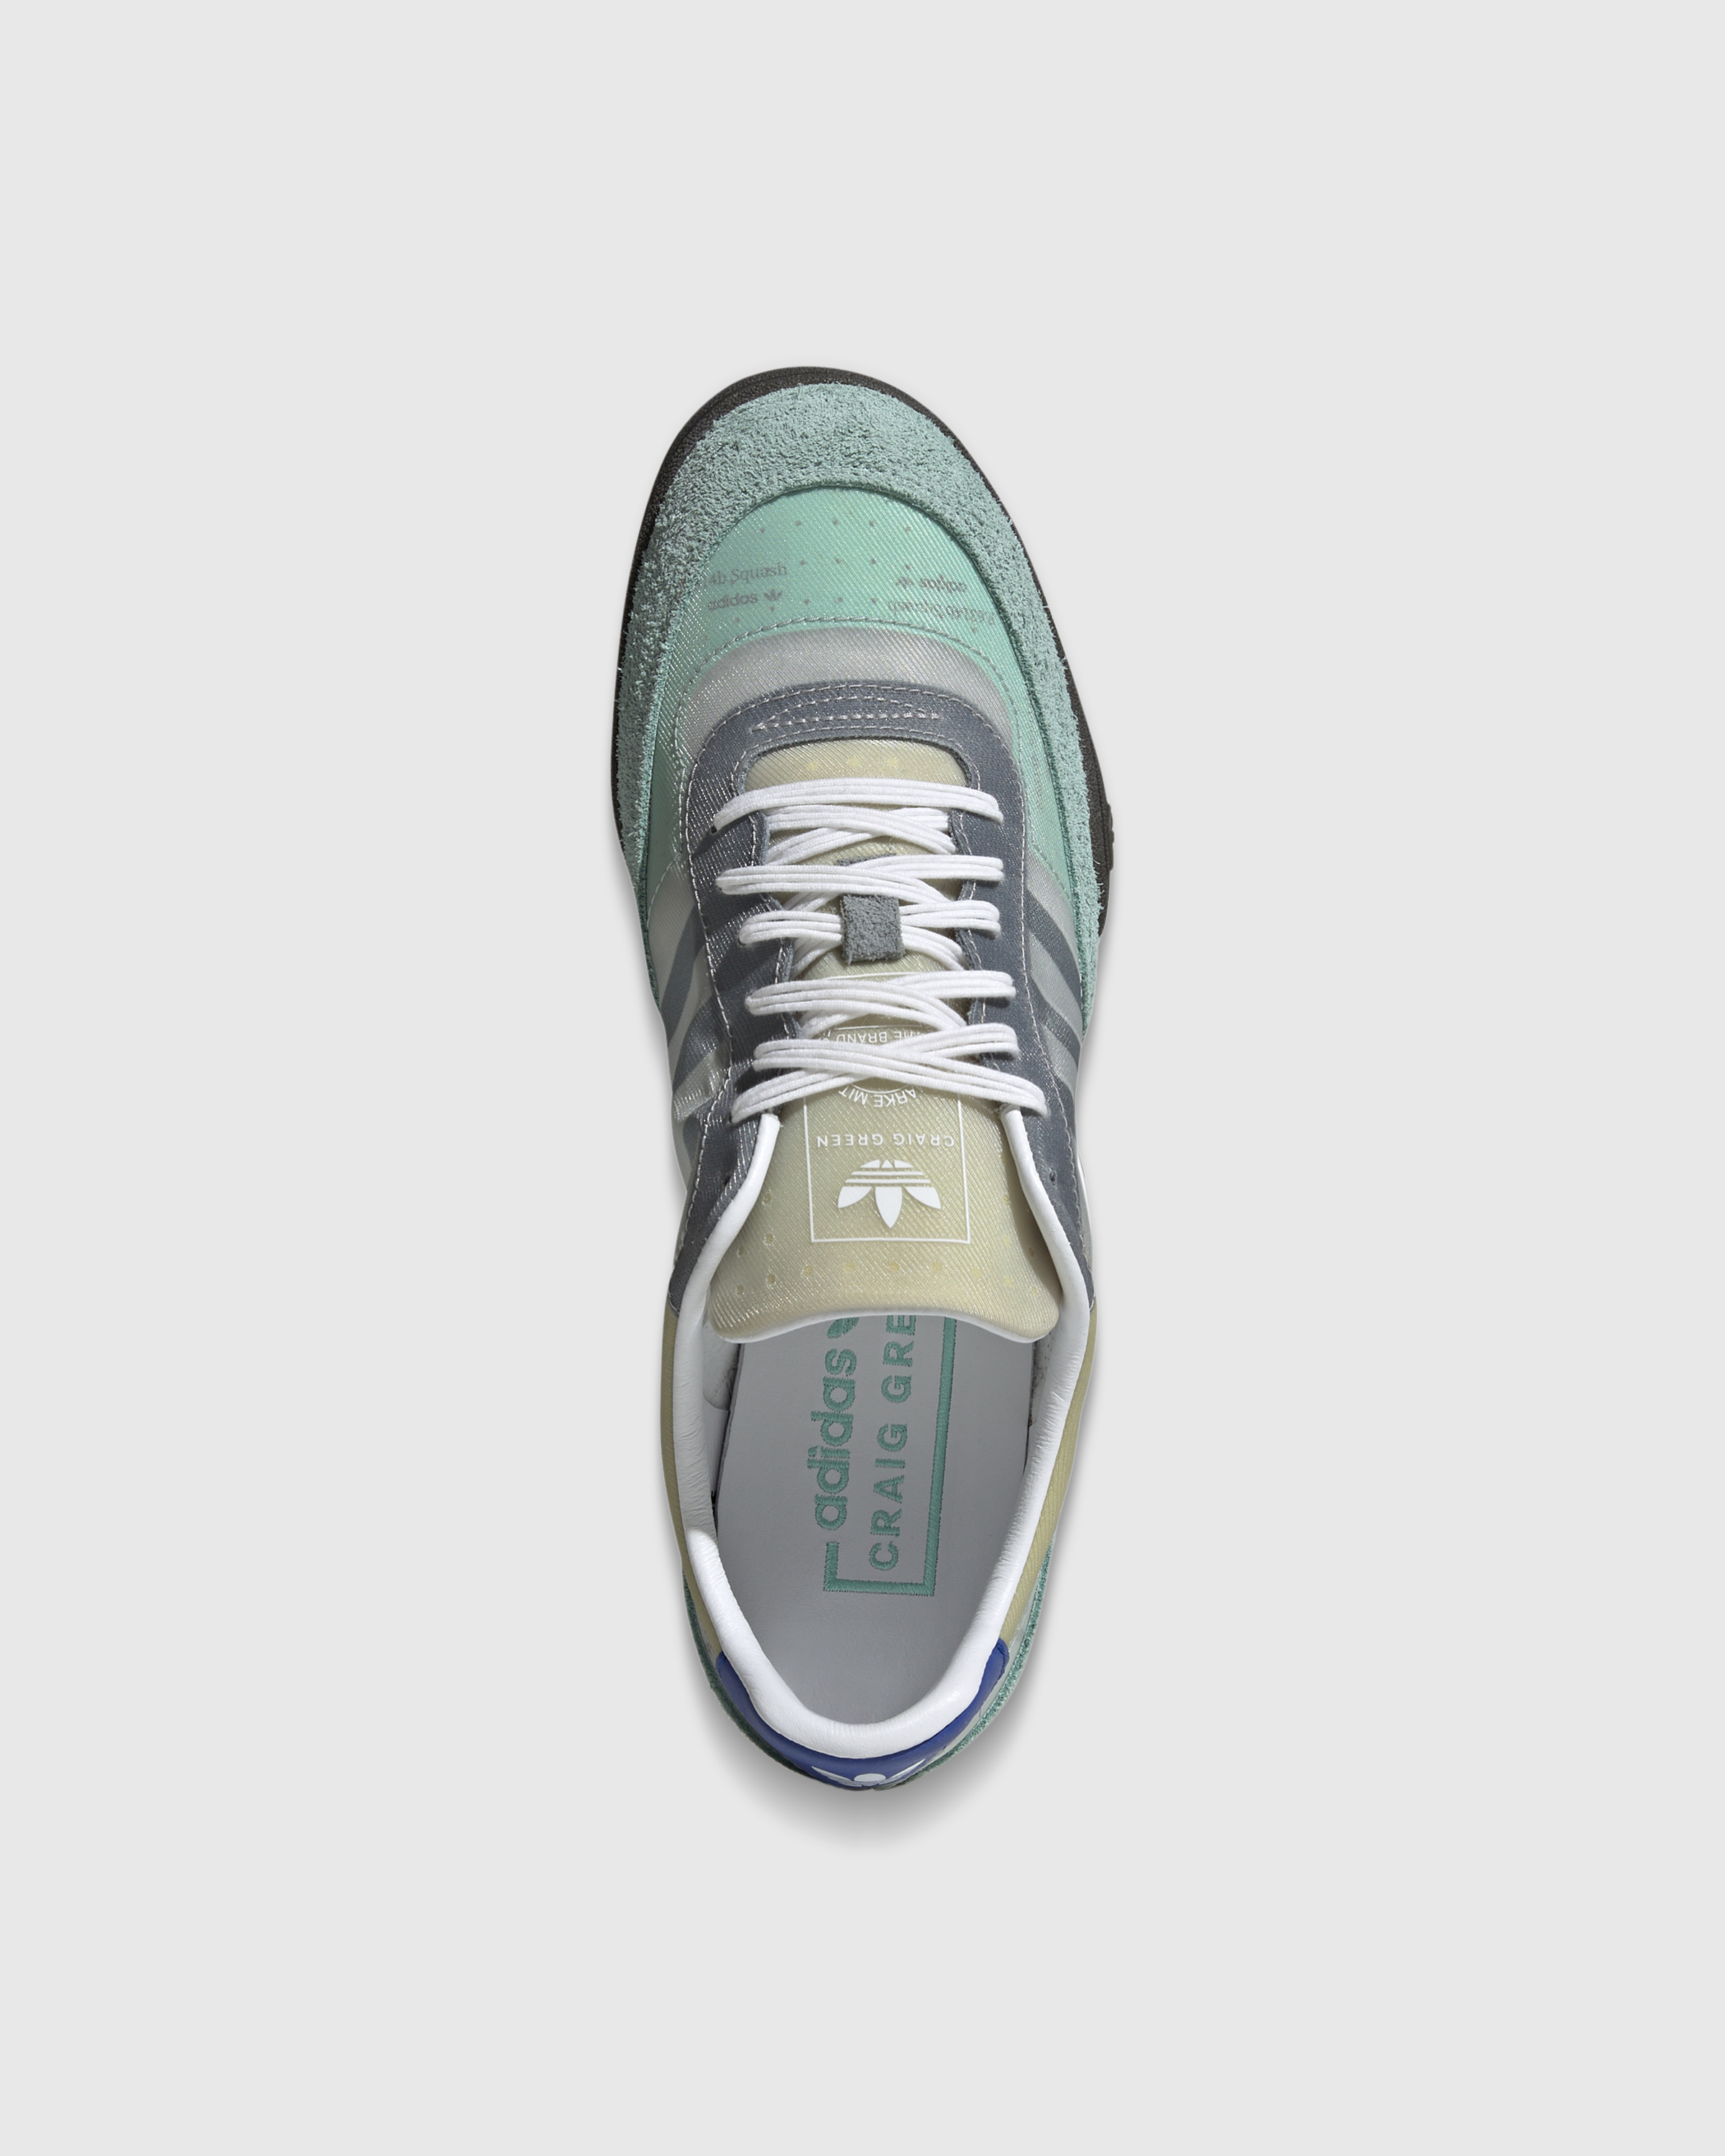 Adidas x Craig Green – Squash Polta Akh Green/Core White/Gum - Low Top Sneakers - Green - Image 5